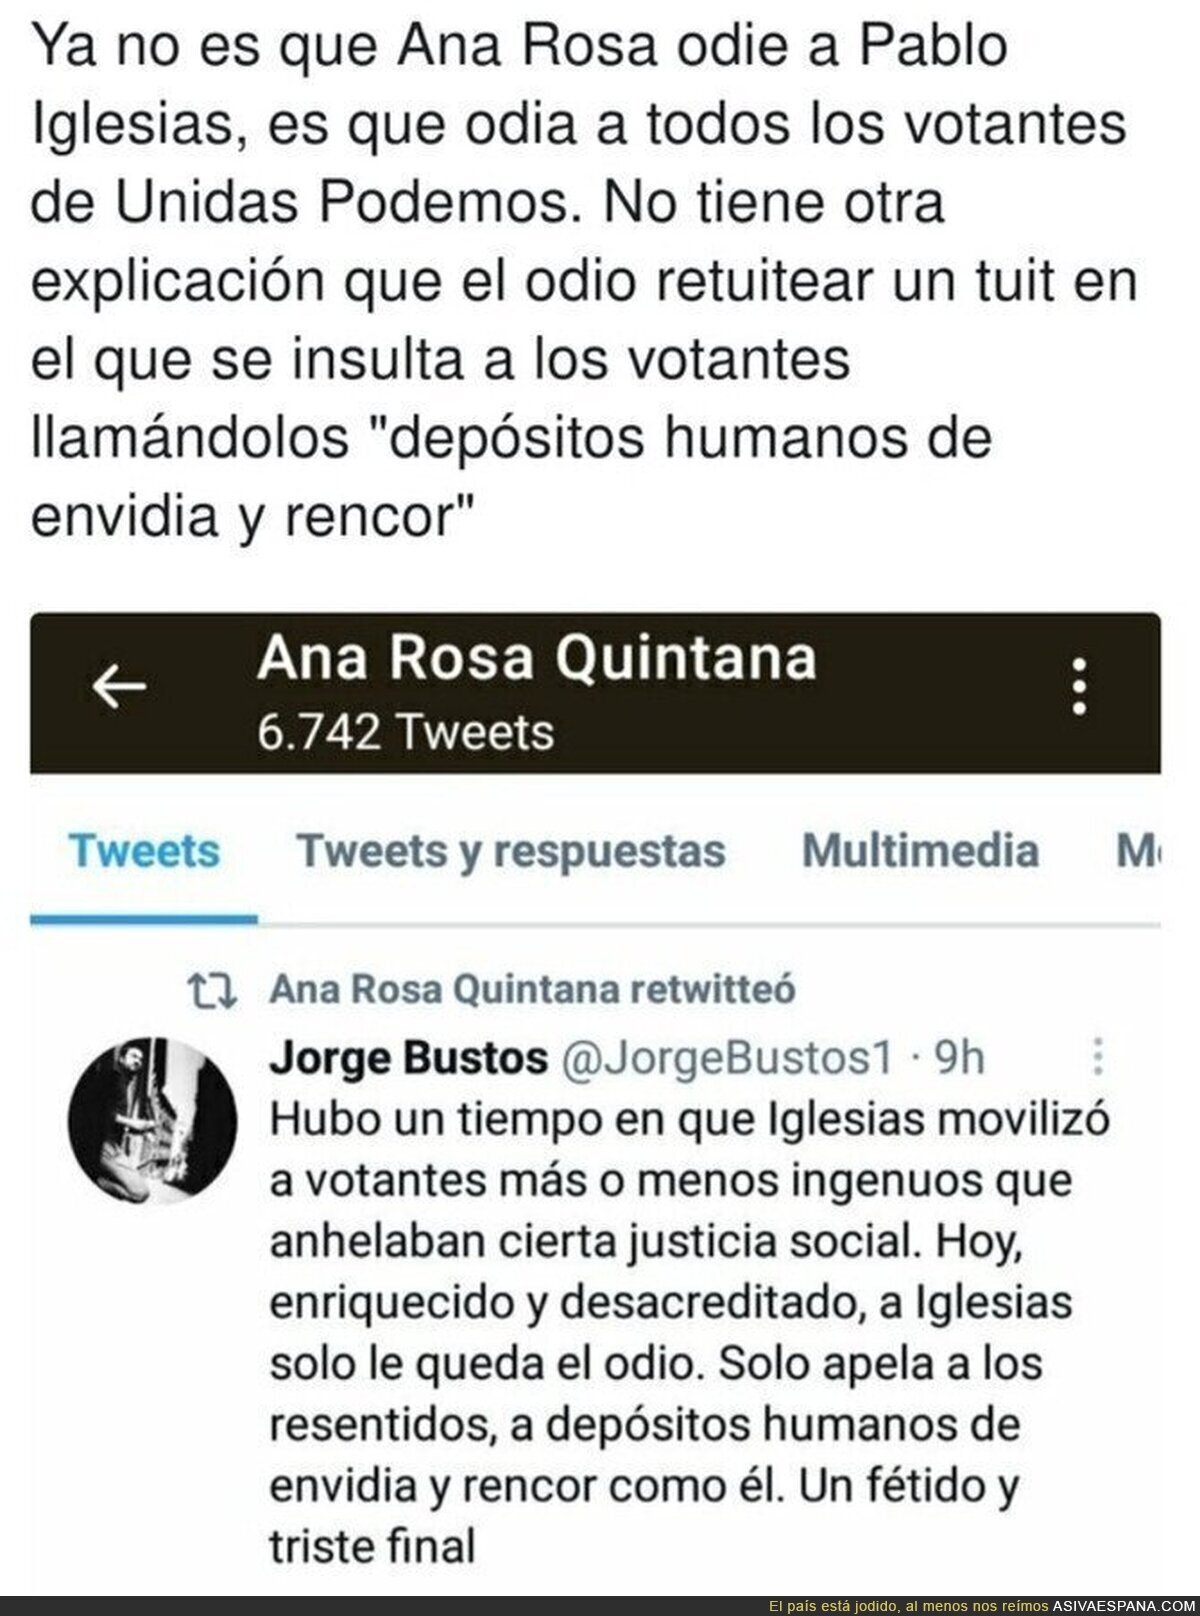 El odio de Ana Rosa Quintana a los votantes de Unidas Podemos